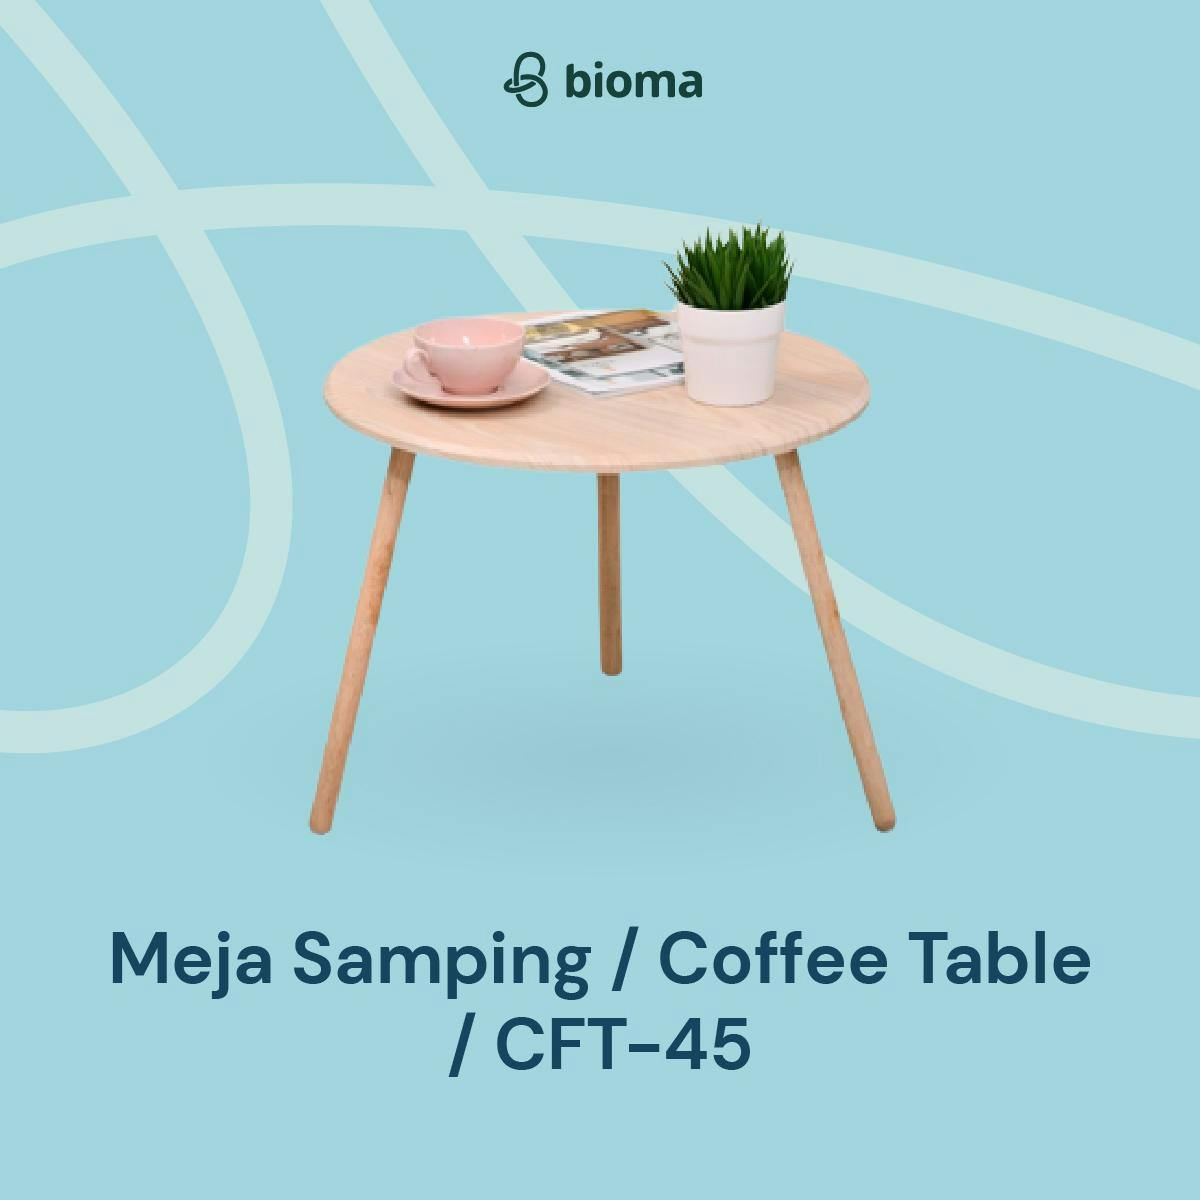 Image 476 Meja Samping / Coffee Table / CFT-45